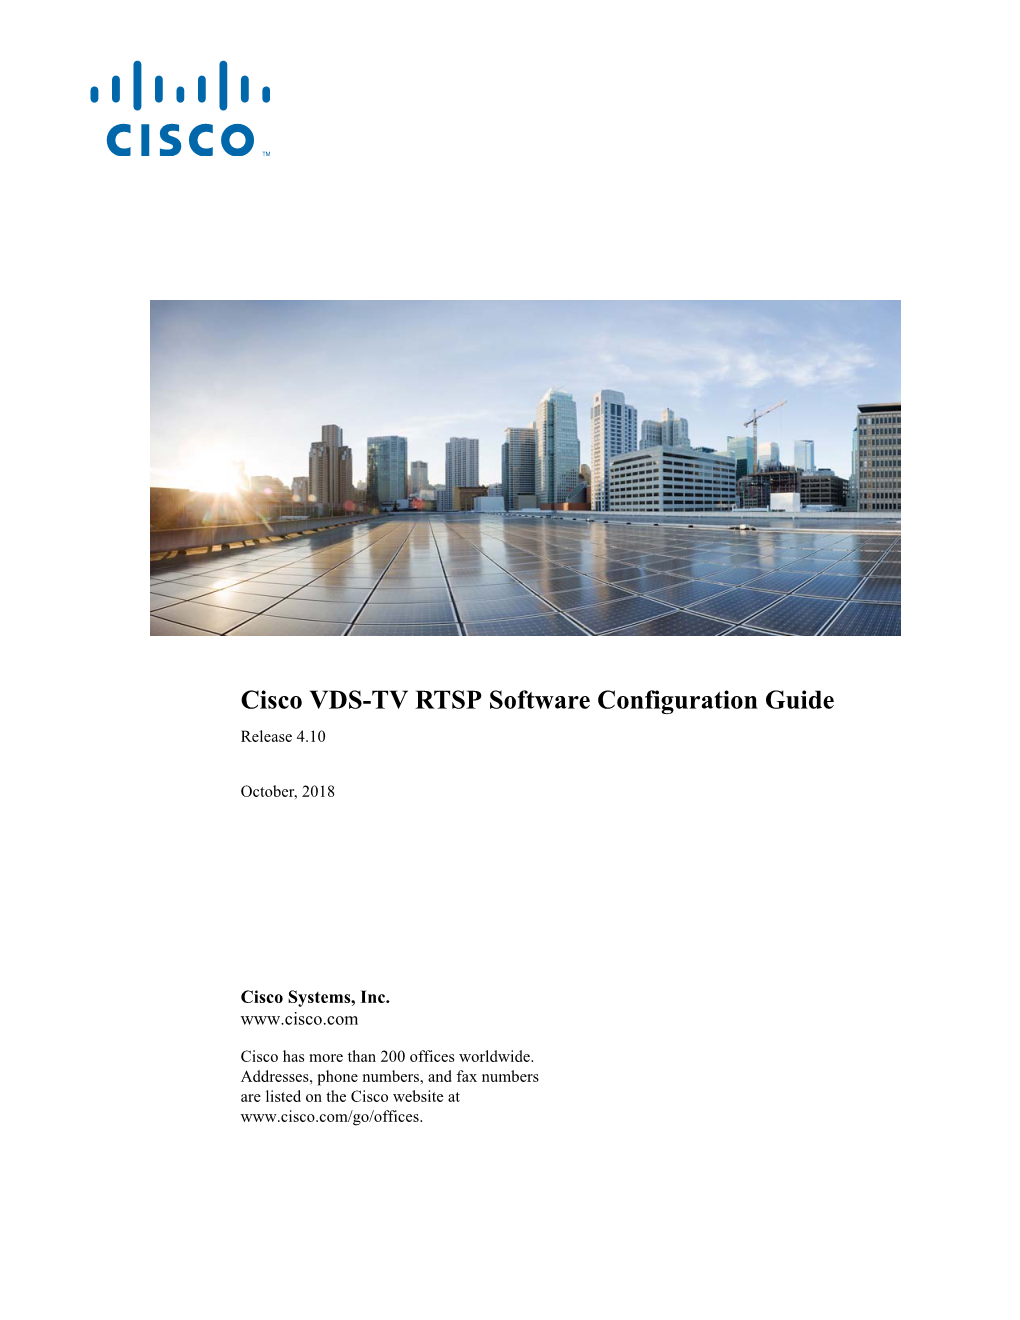 Cisco VDS-TV RTSP Configuration Guide, Release 4.10